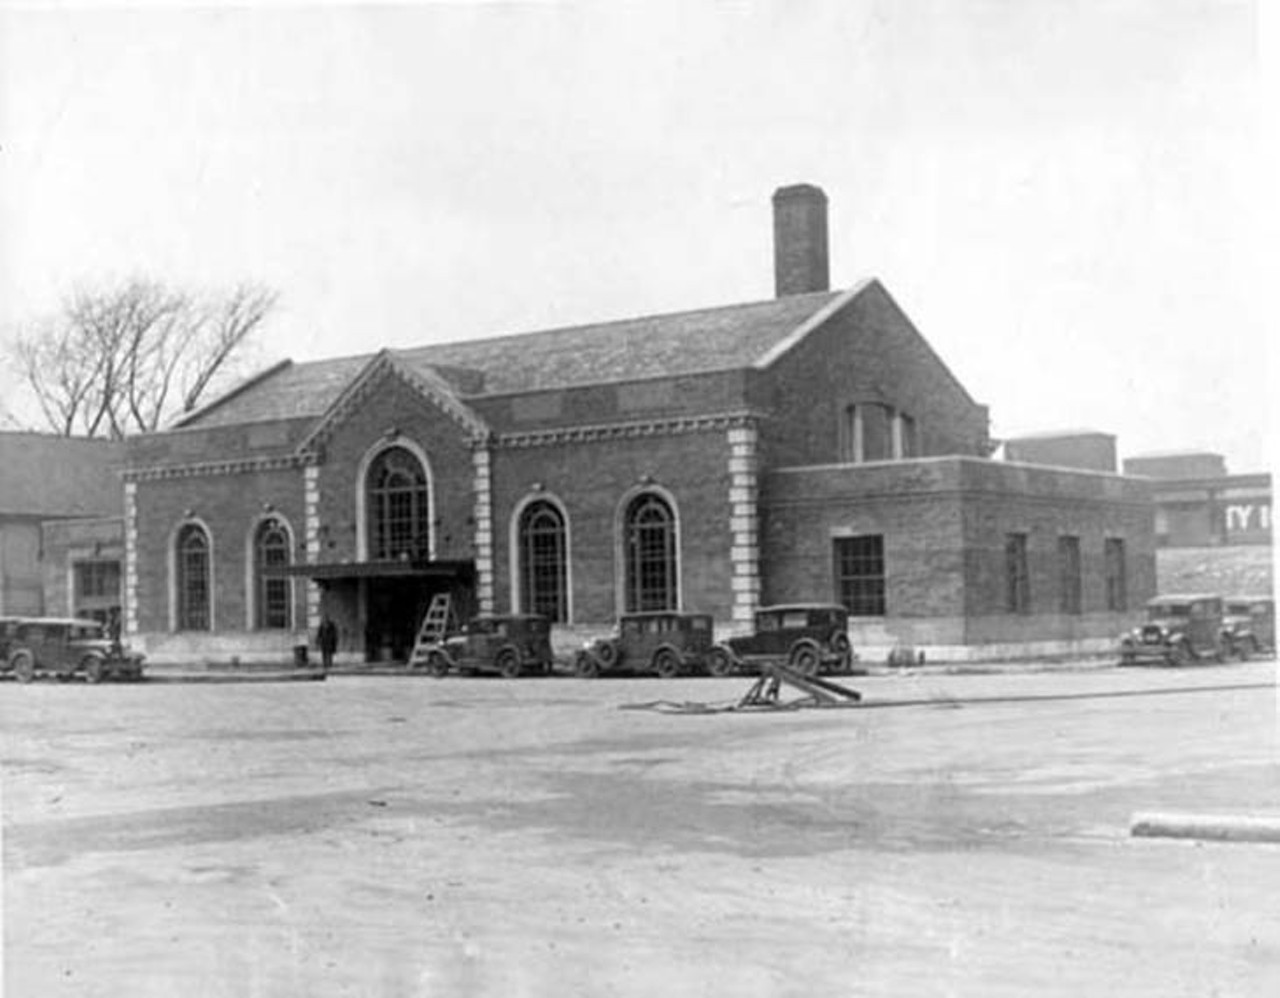  Railroad Station, 1930 